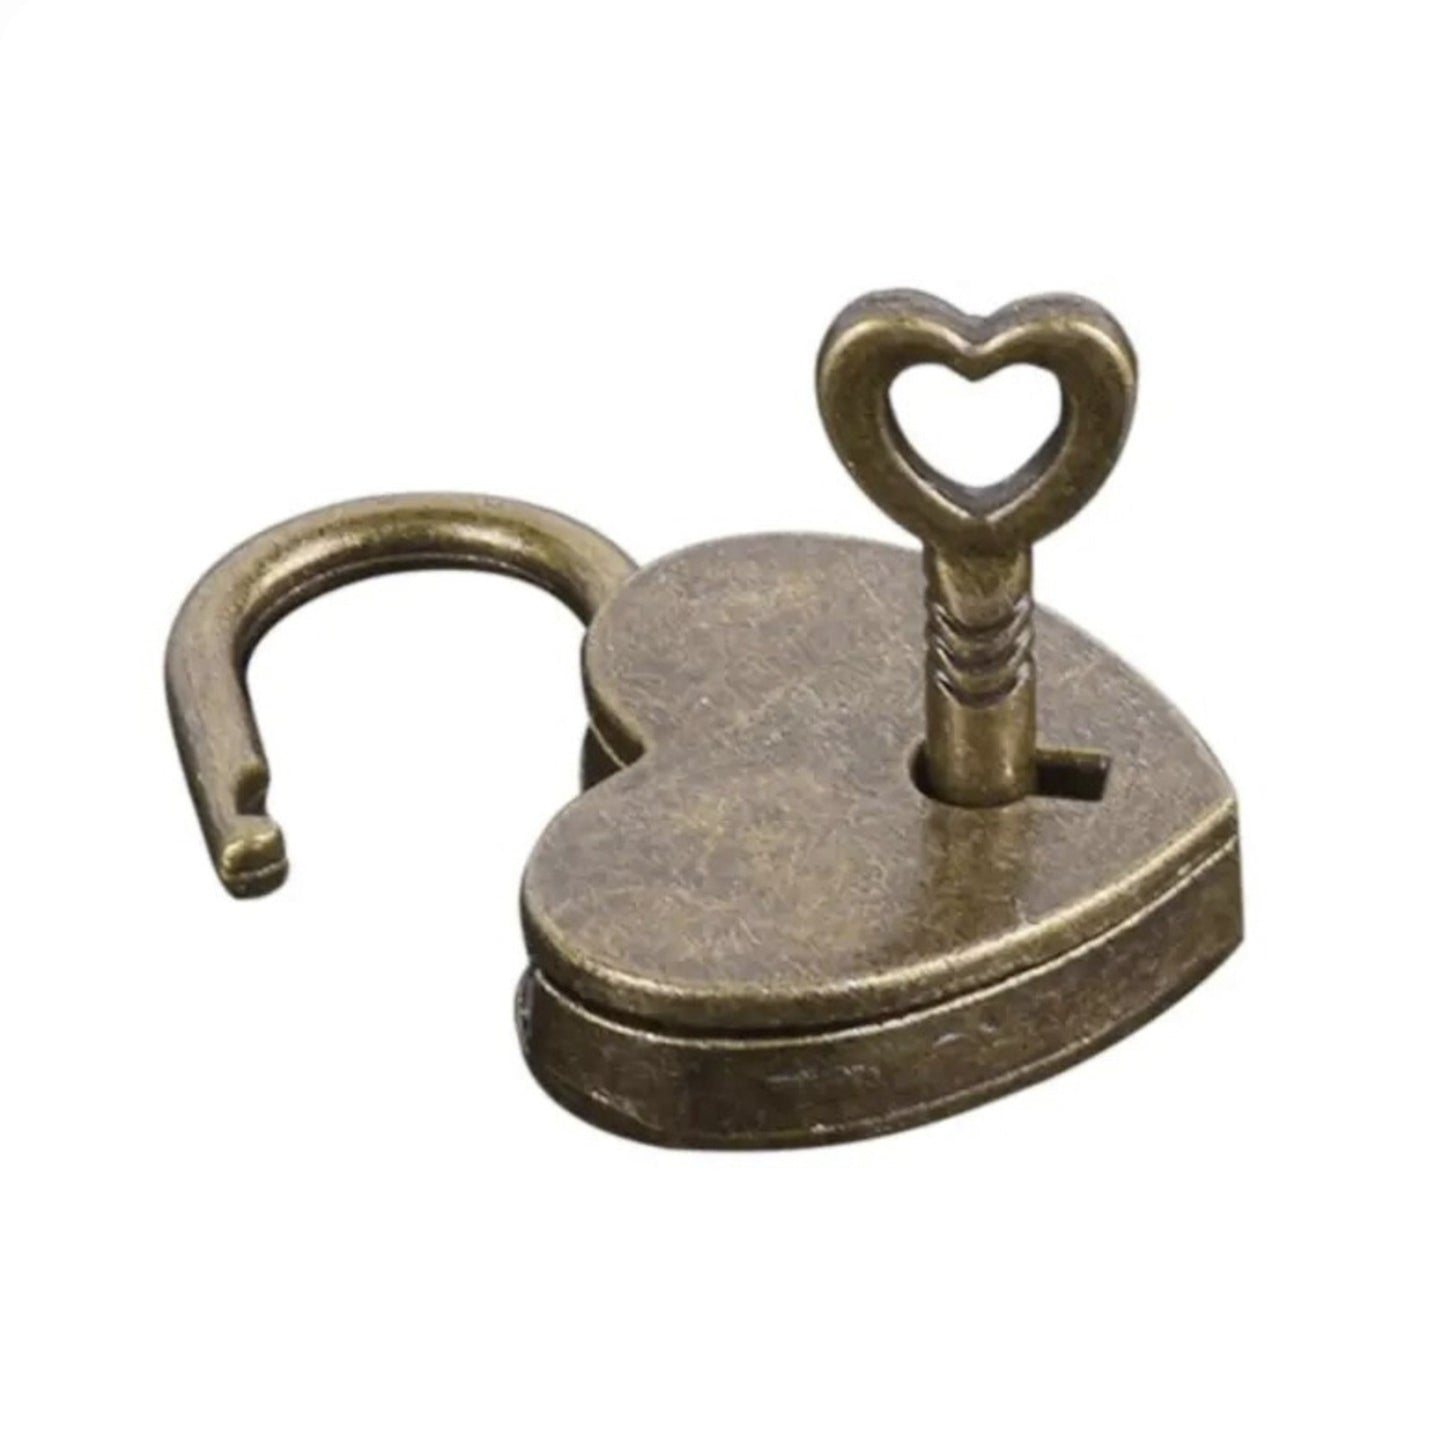 Heart Shape Padlock & Key Antique Brass Colour Girls Jewelry Box Case Wooden Chest Vintage Decorative